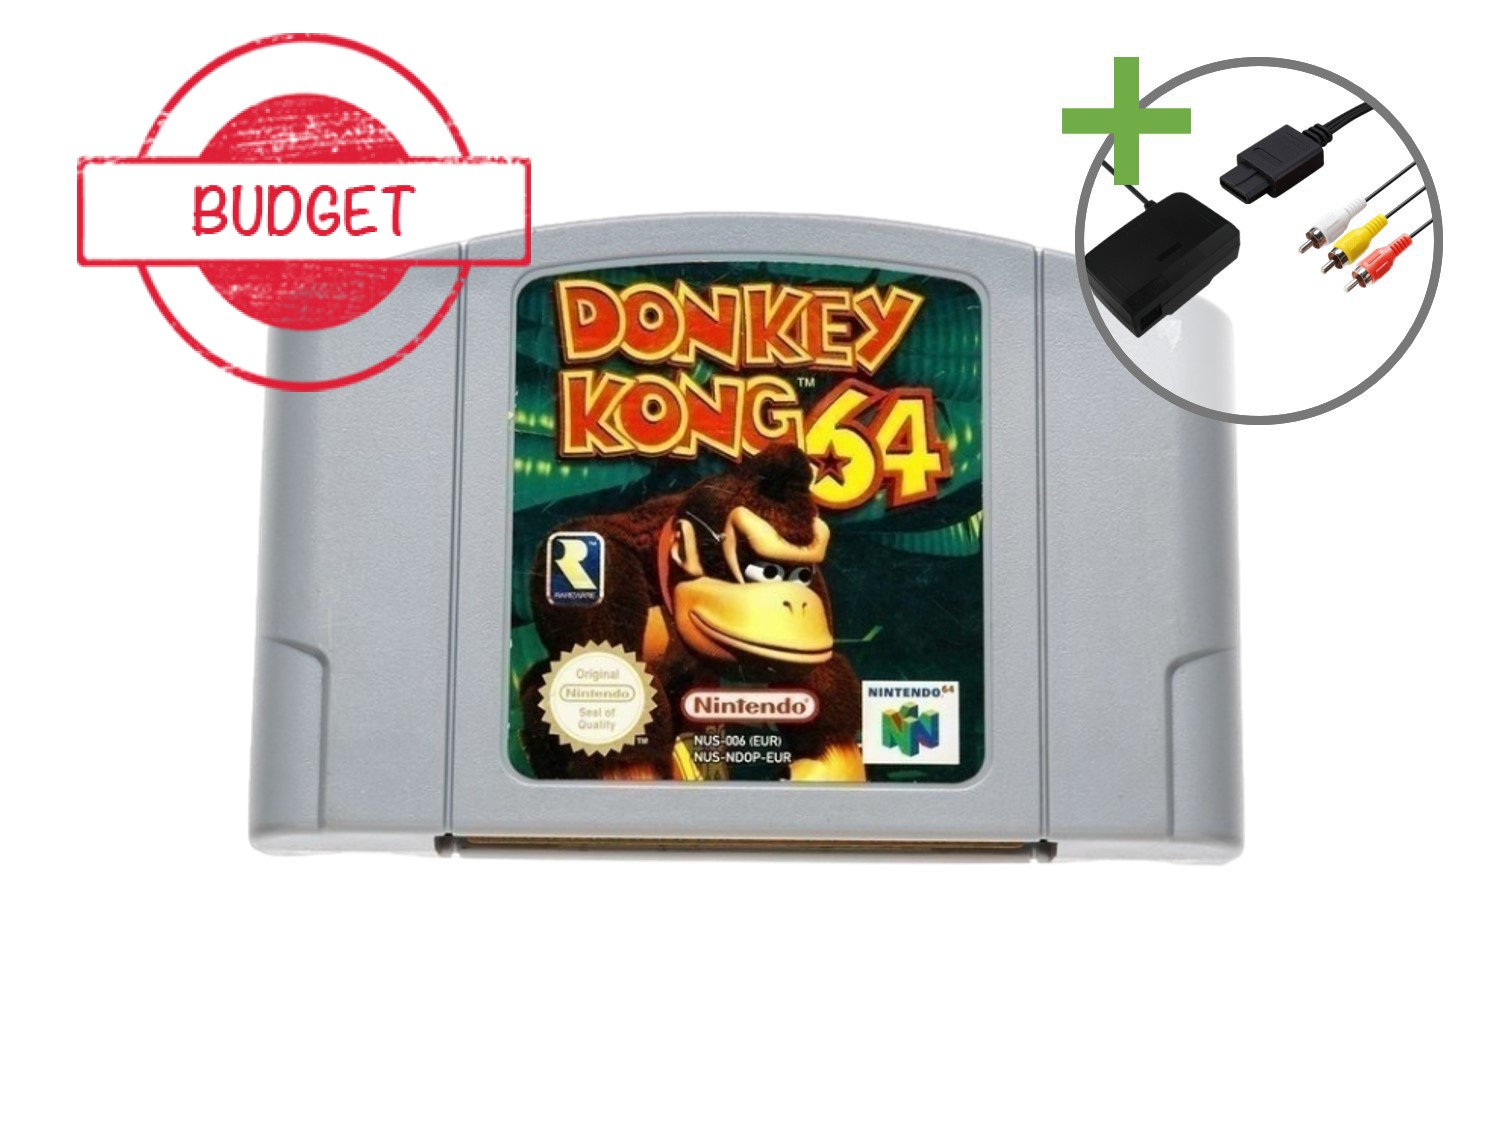 Nintendo 64 Starter Pack - Tim's Jungle Pack - Budget - Nintendo 64 Hardware - 4